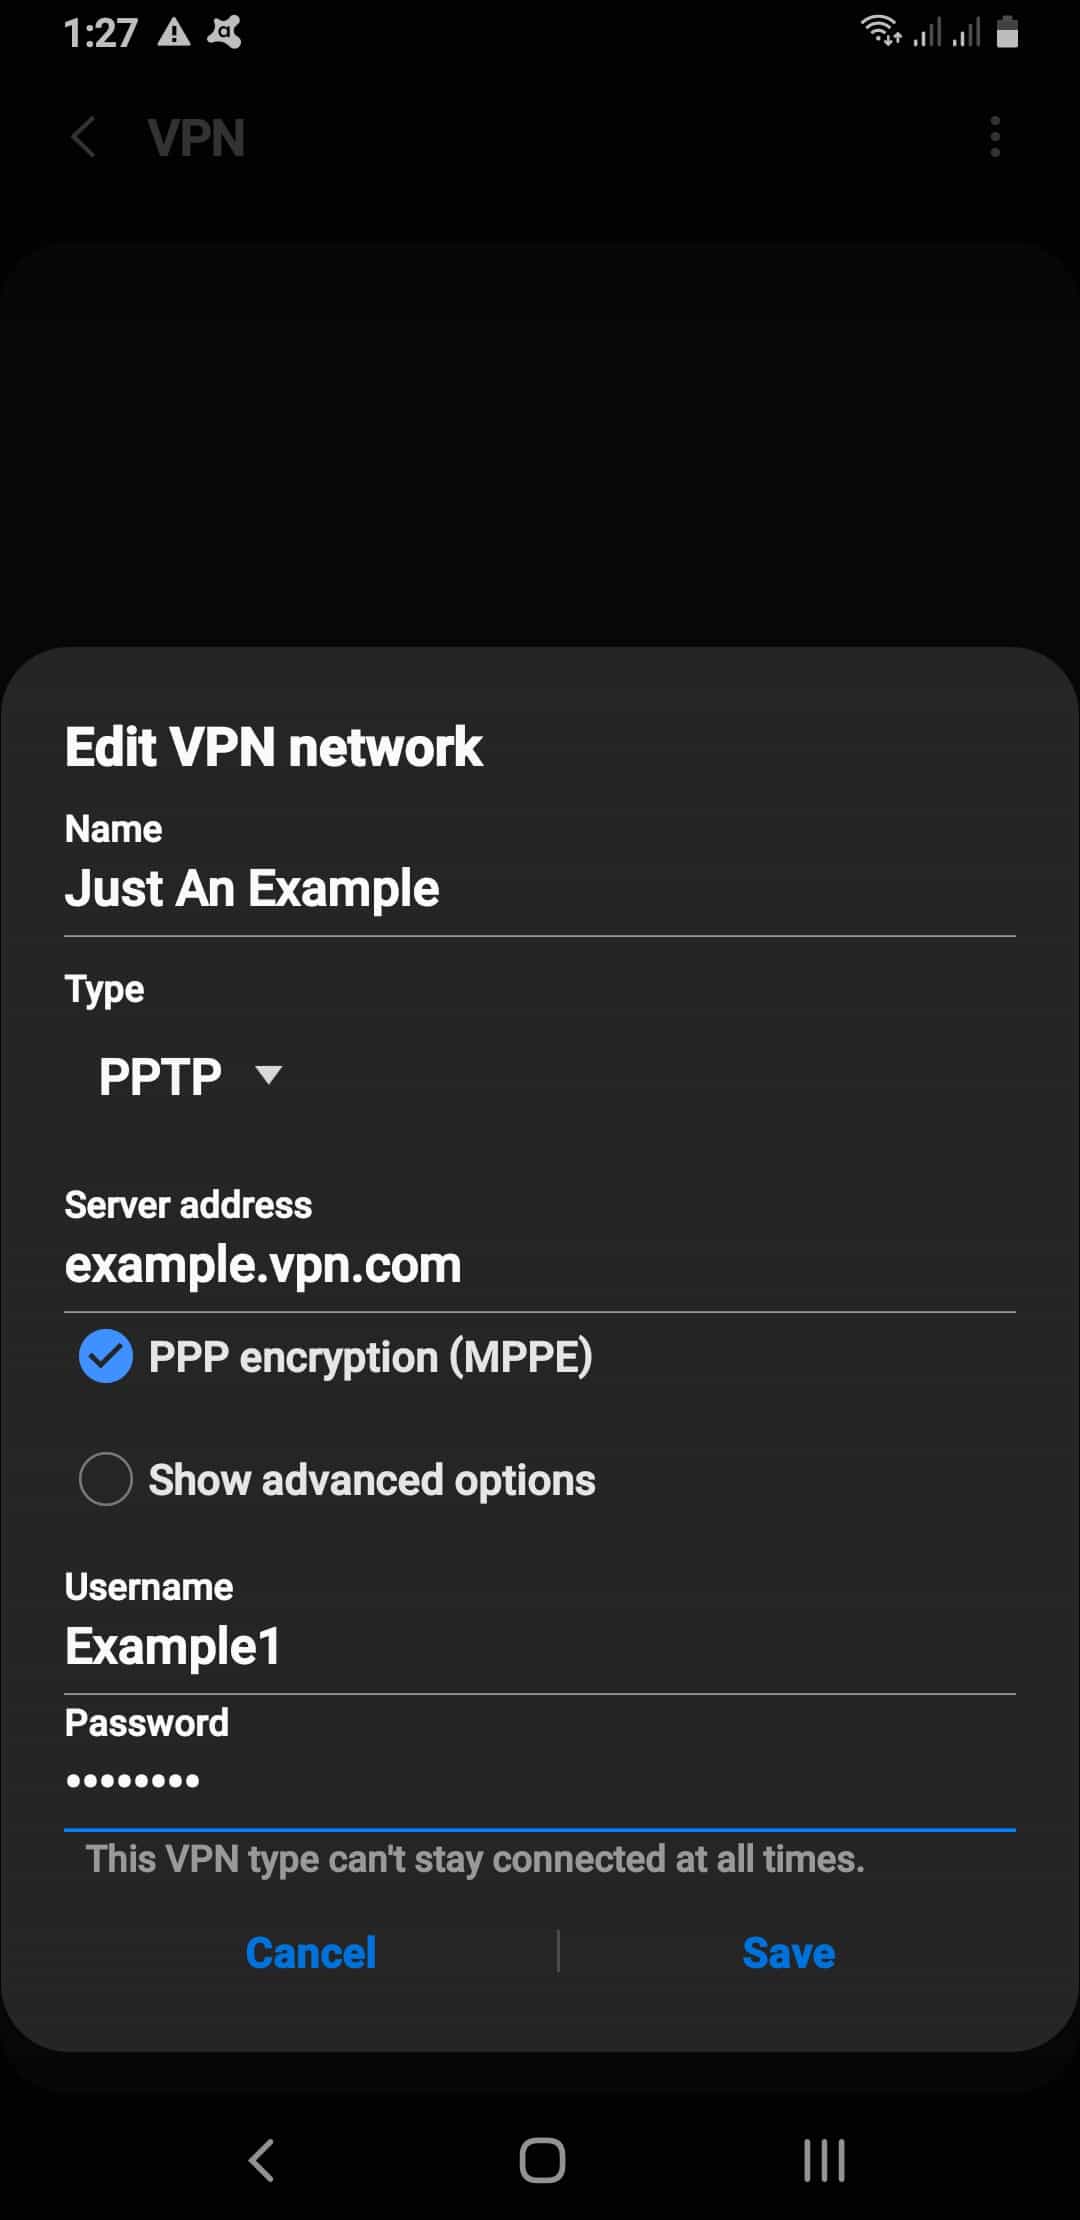 Where do I find the VPN setting?